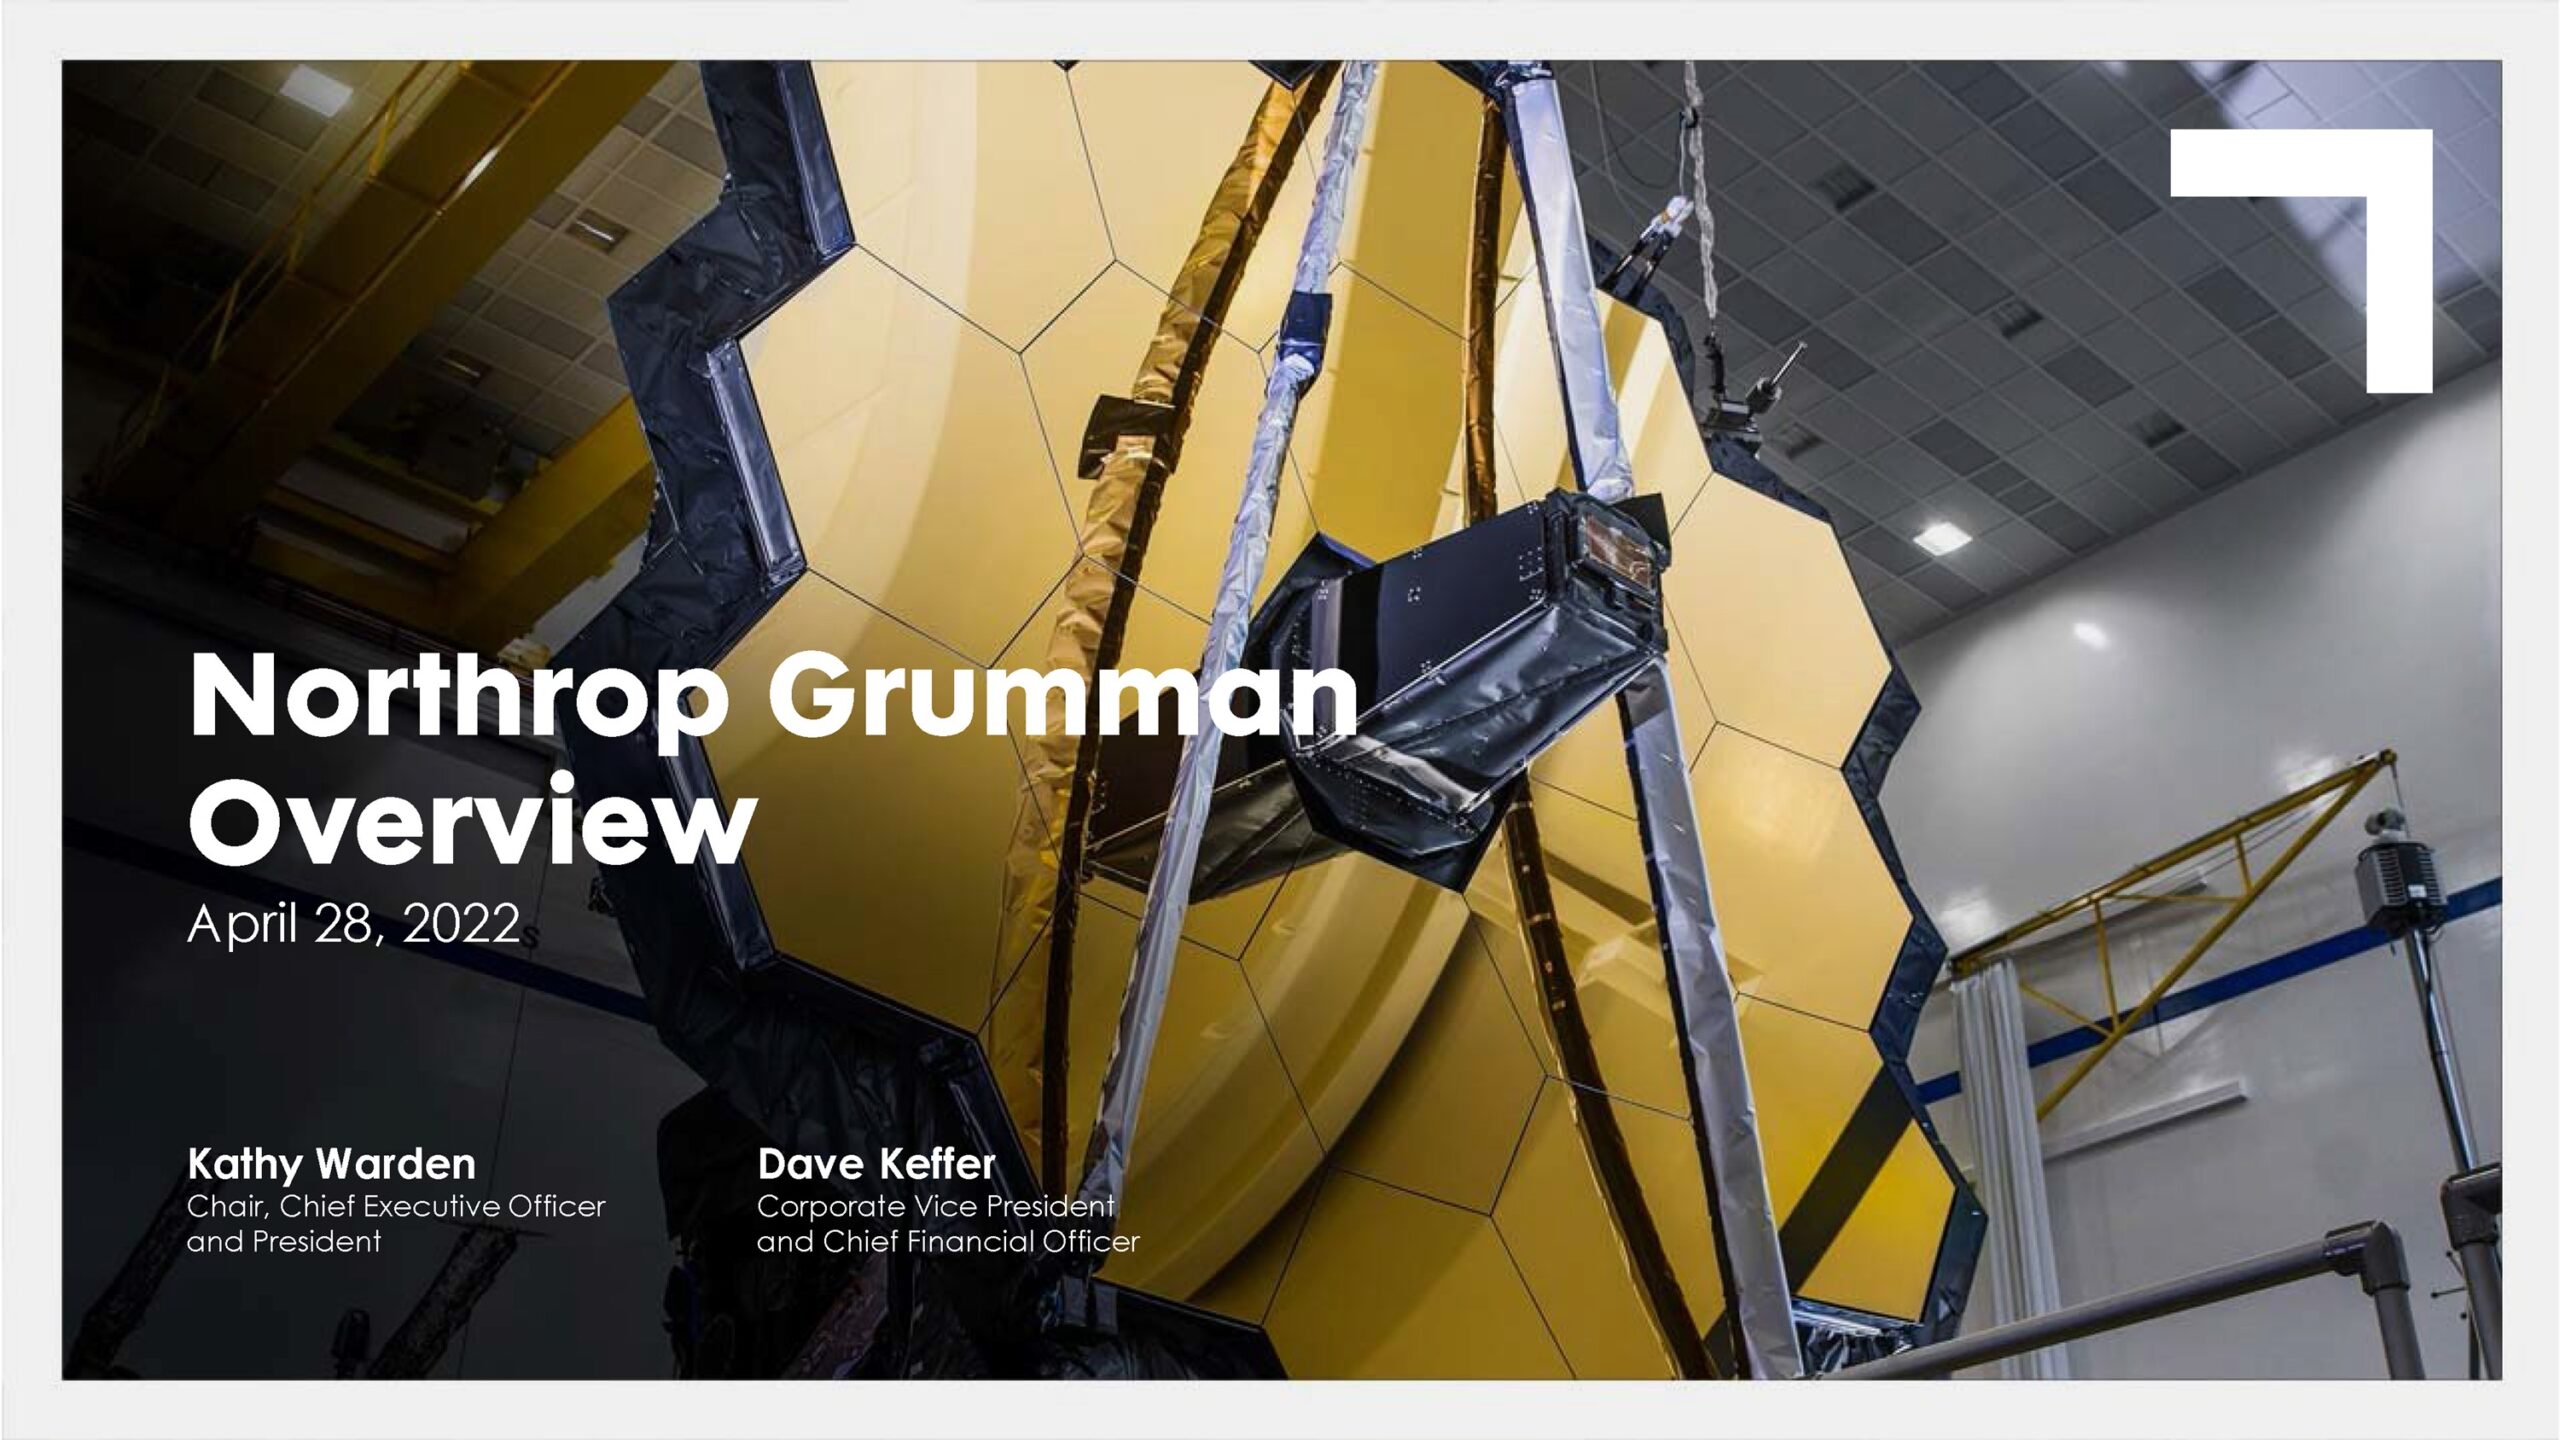 Investor Overview Presentation for Northrop Grumman